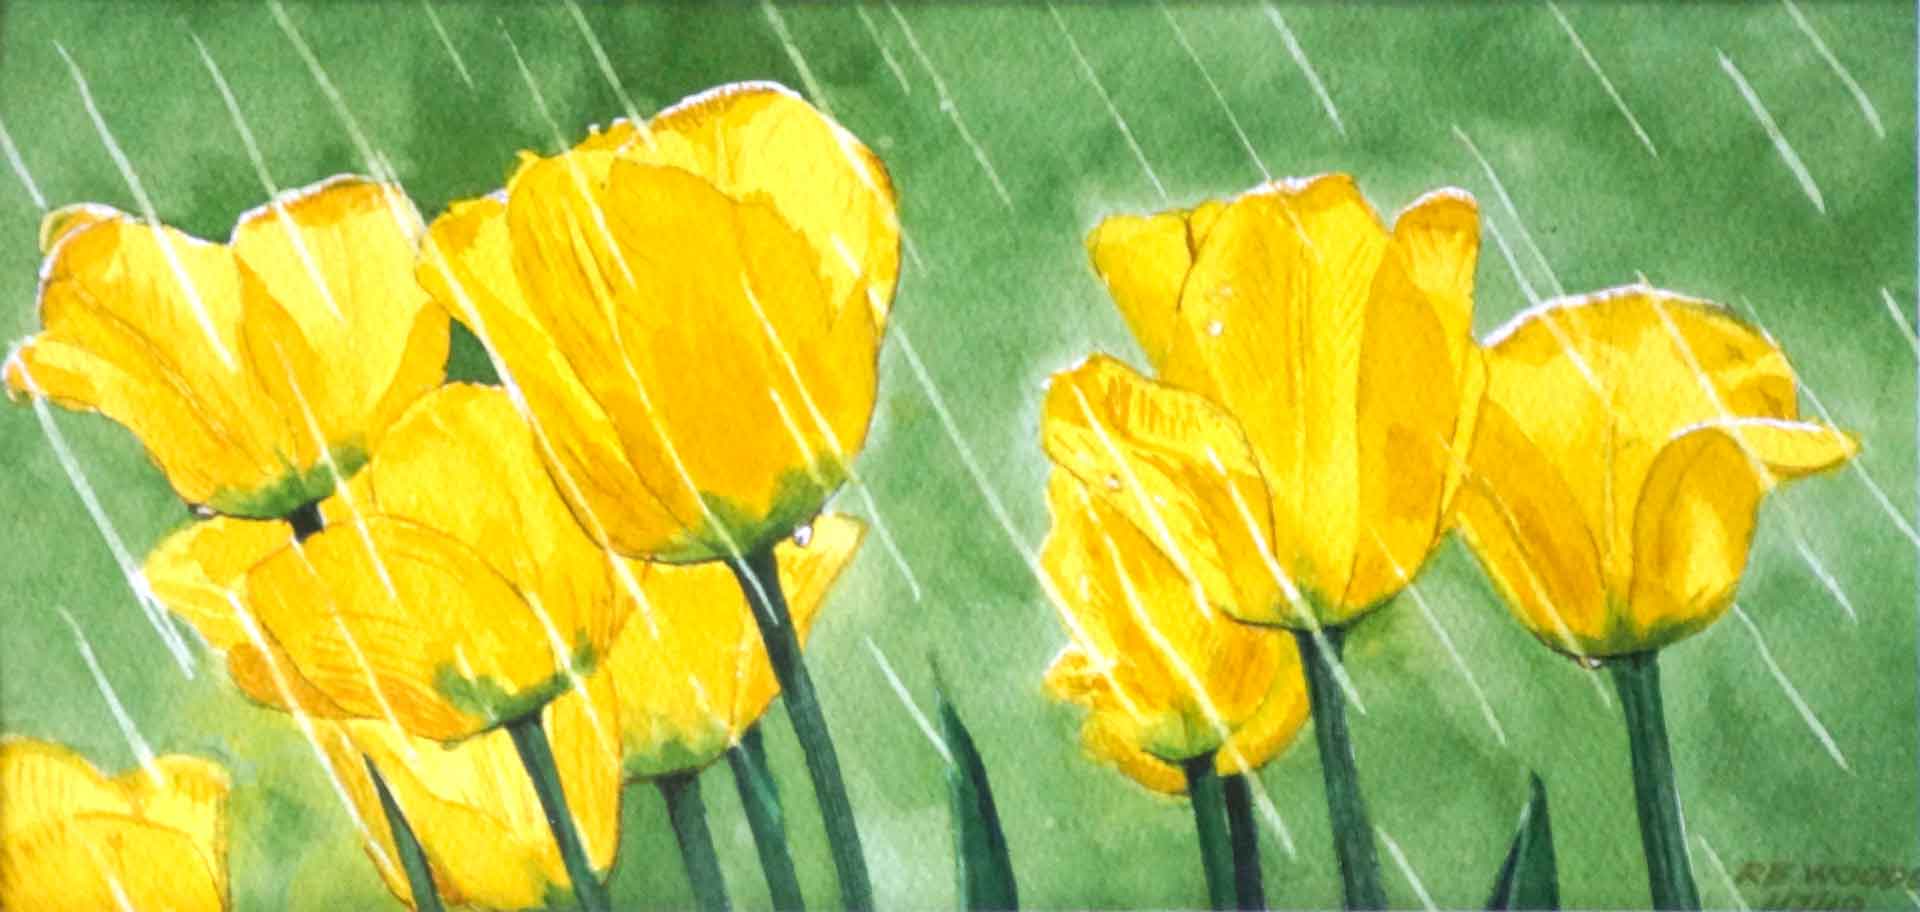 Tulips in Rain, Watercolor on paper, 16.5 x 6.25